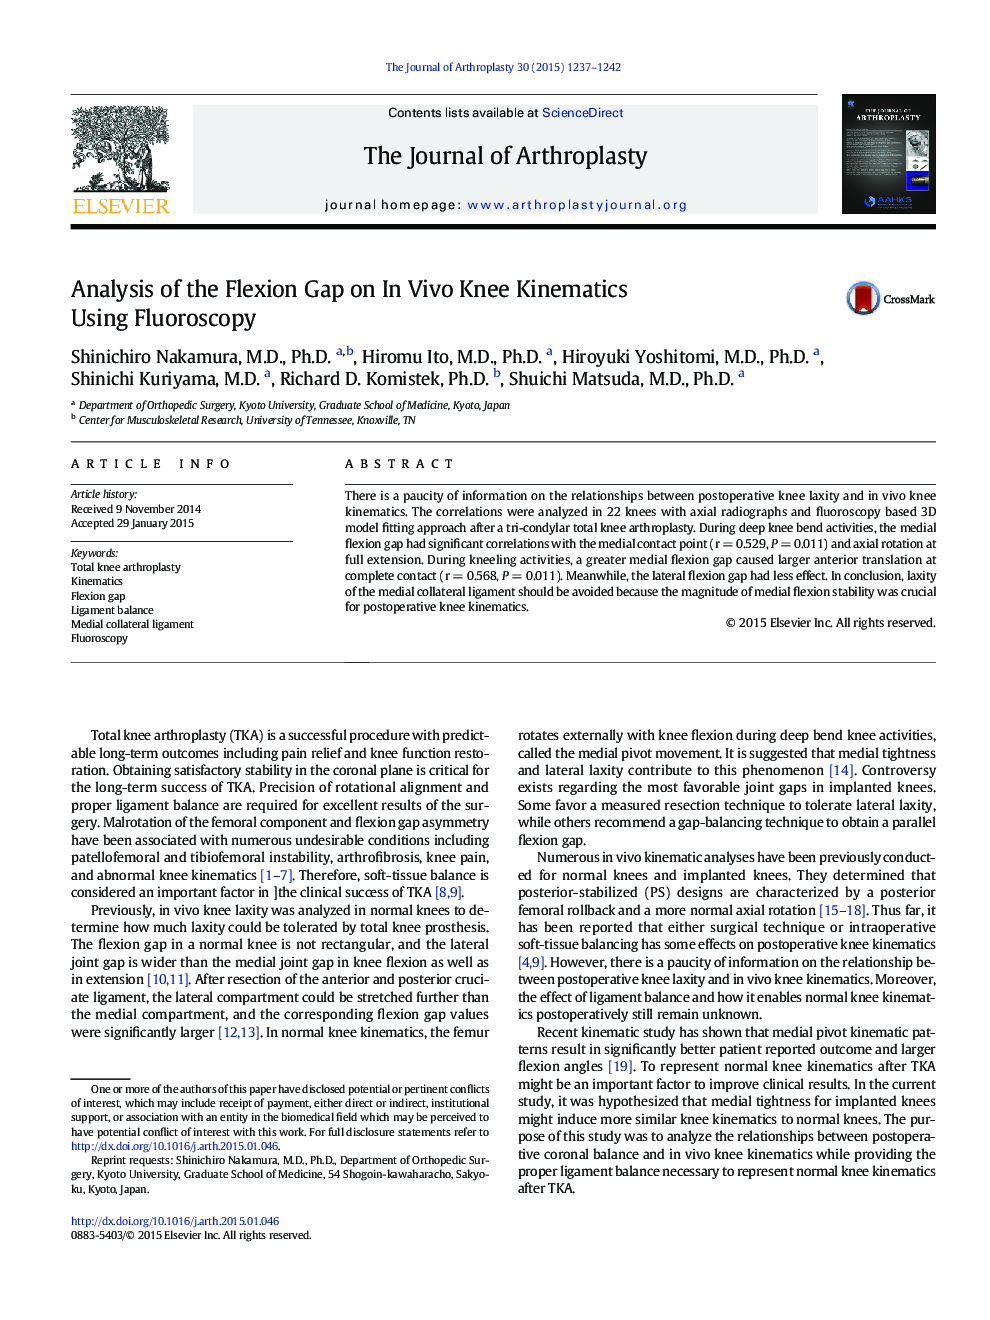 Analysis of the Flexion Gap on In Vivo Knee Kinematics Using Fluoroscopy 